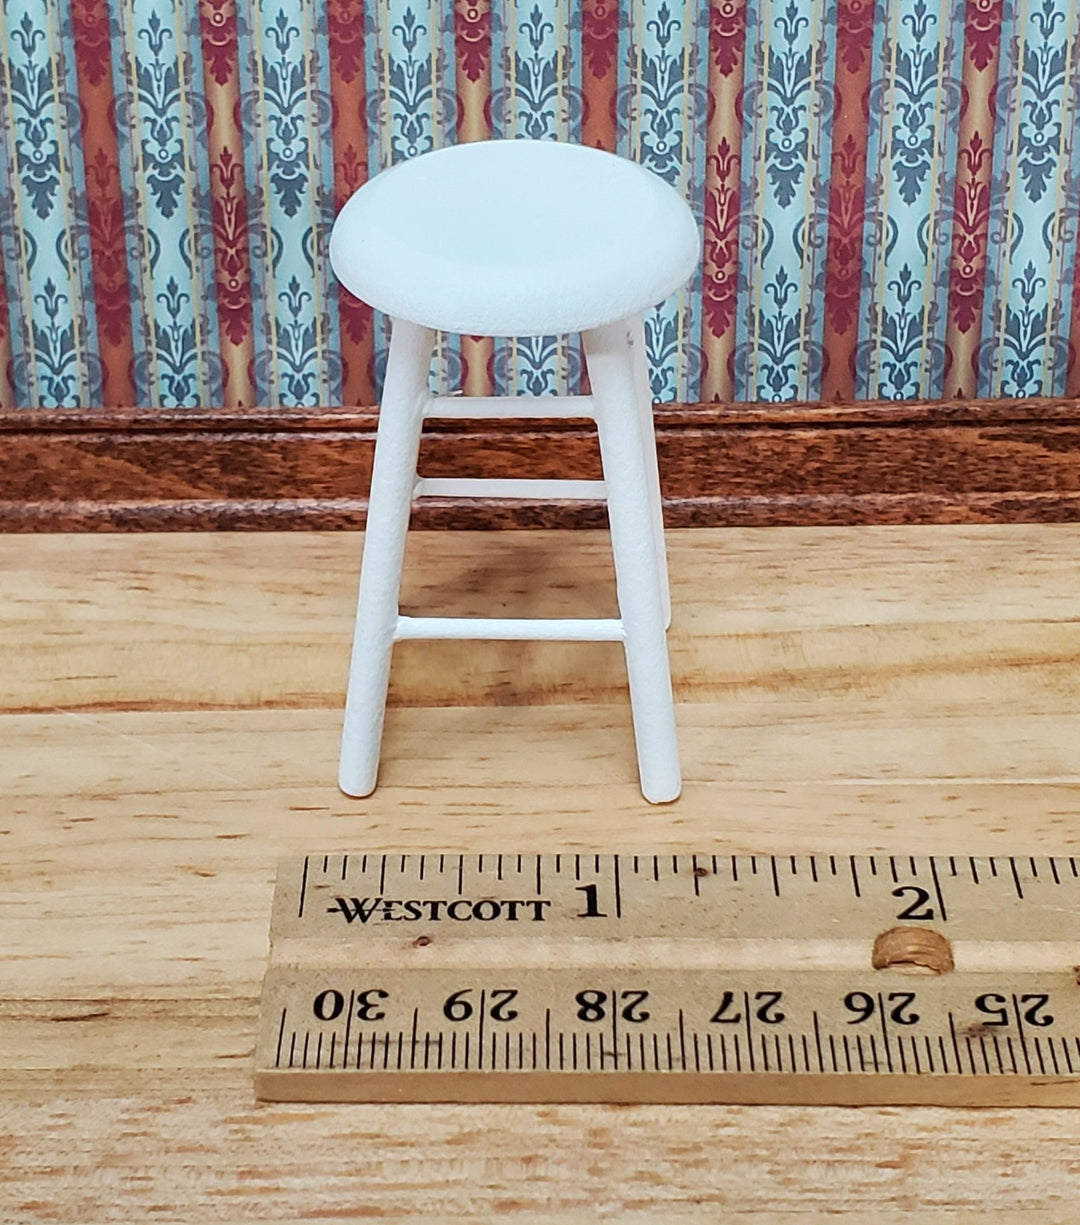 Dollhouse Bar Stool Wood White Finish 1:12 Scale Miniature Furniture Slim Profile - Miniature Crush